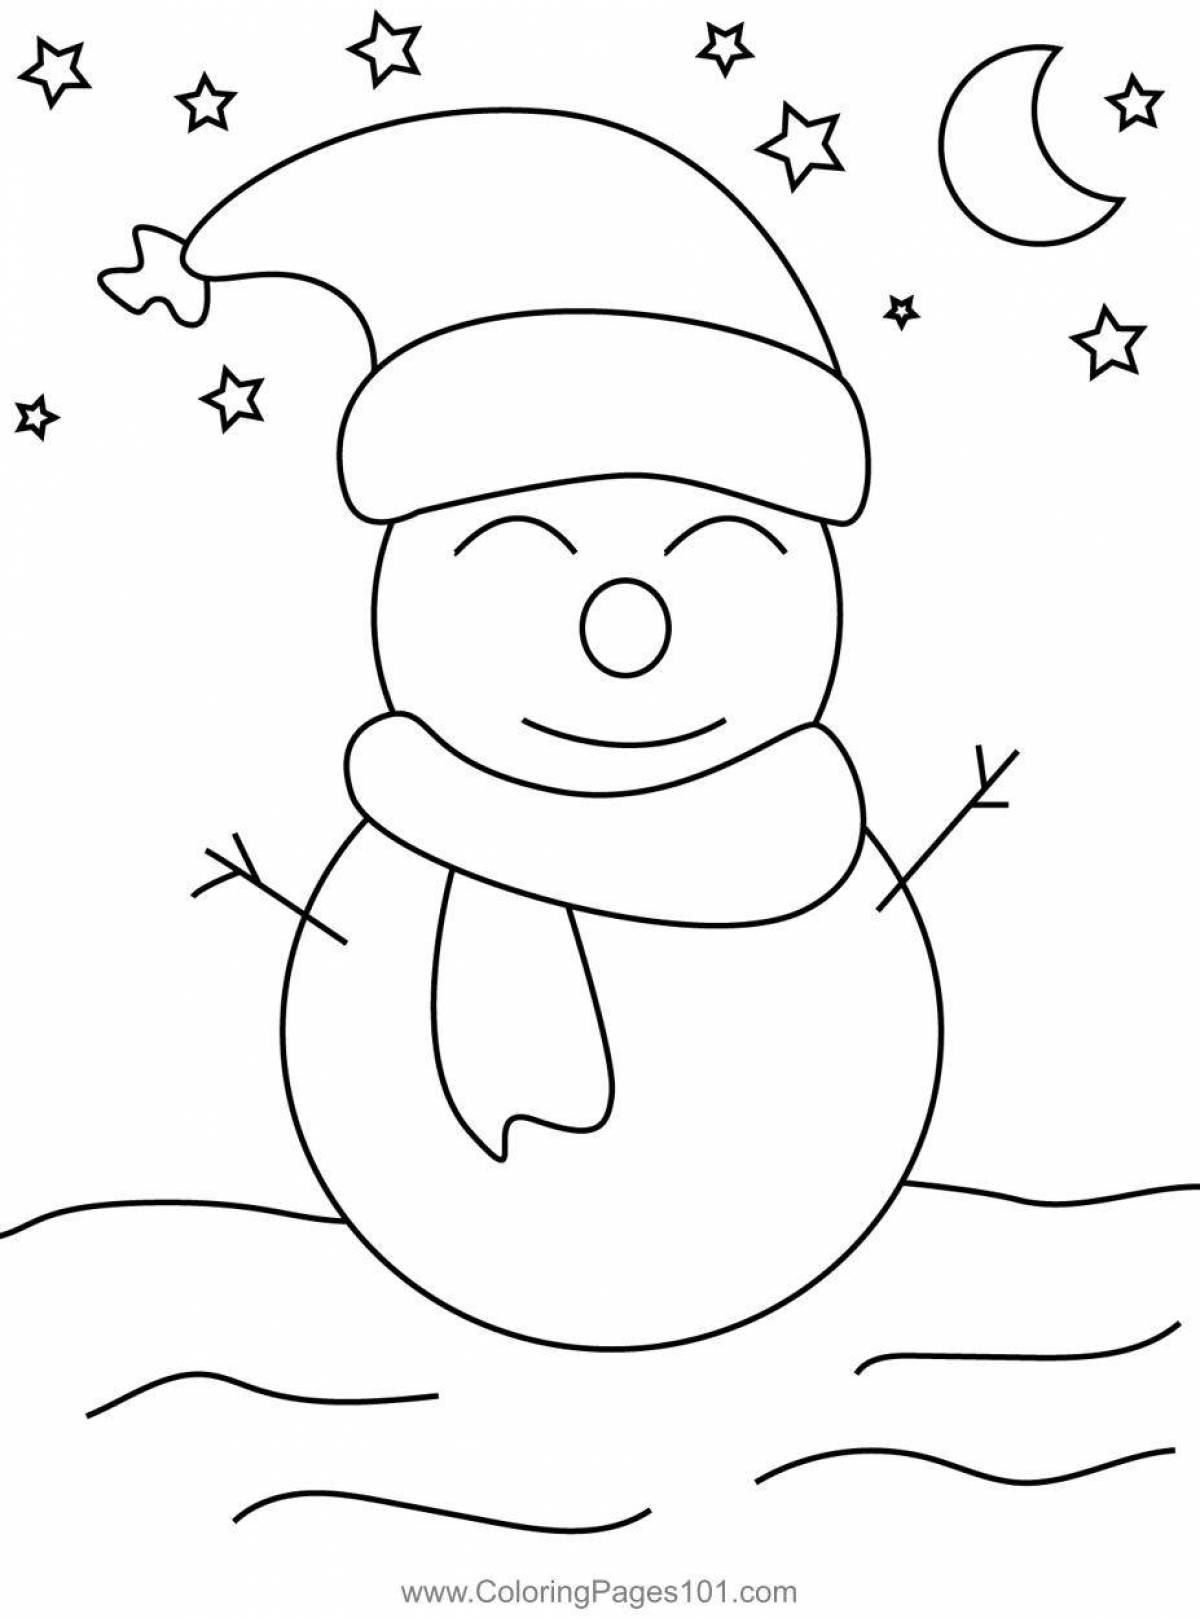 Glamorous snowman coloring book